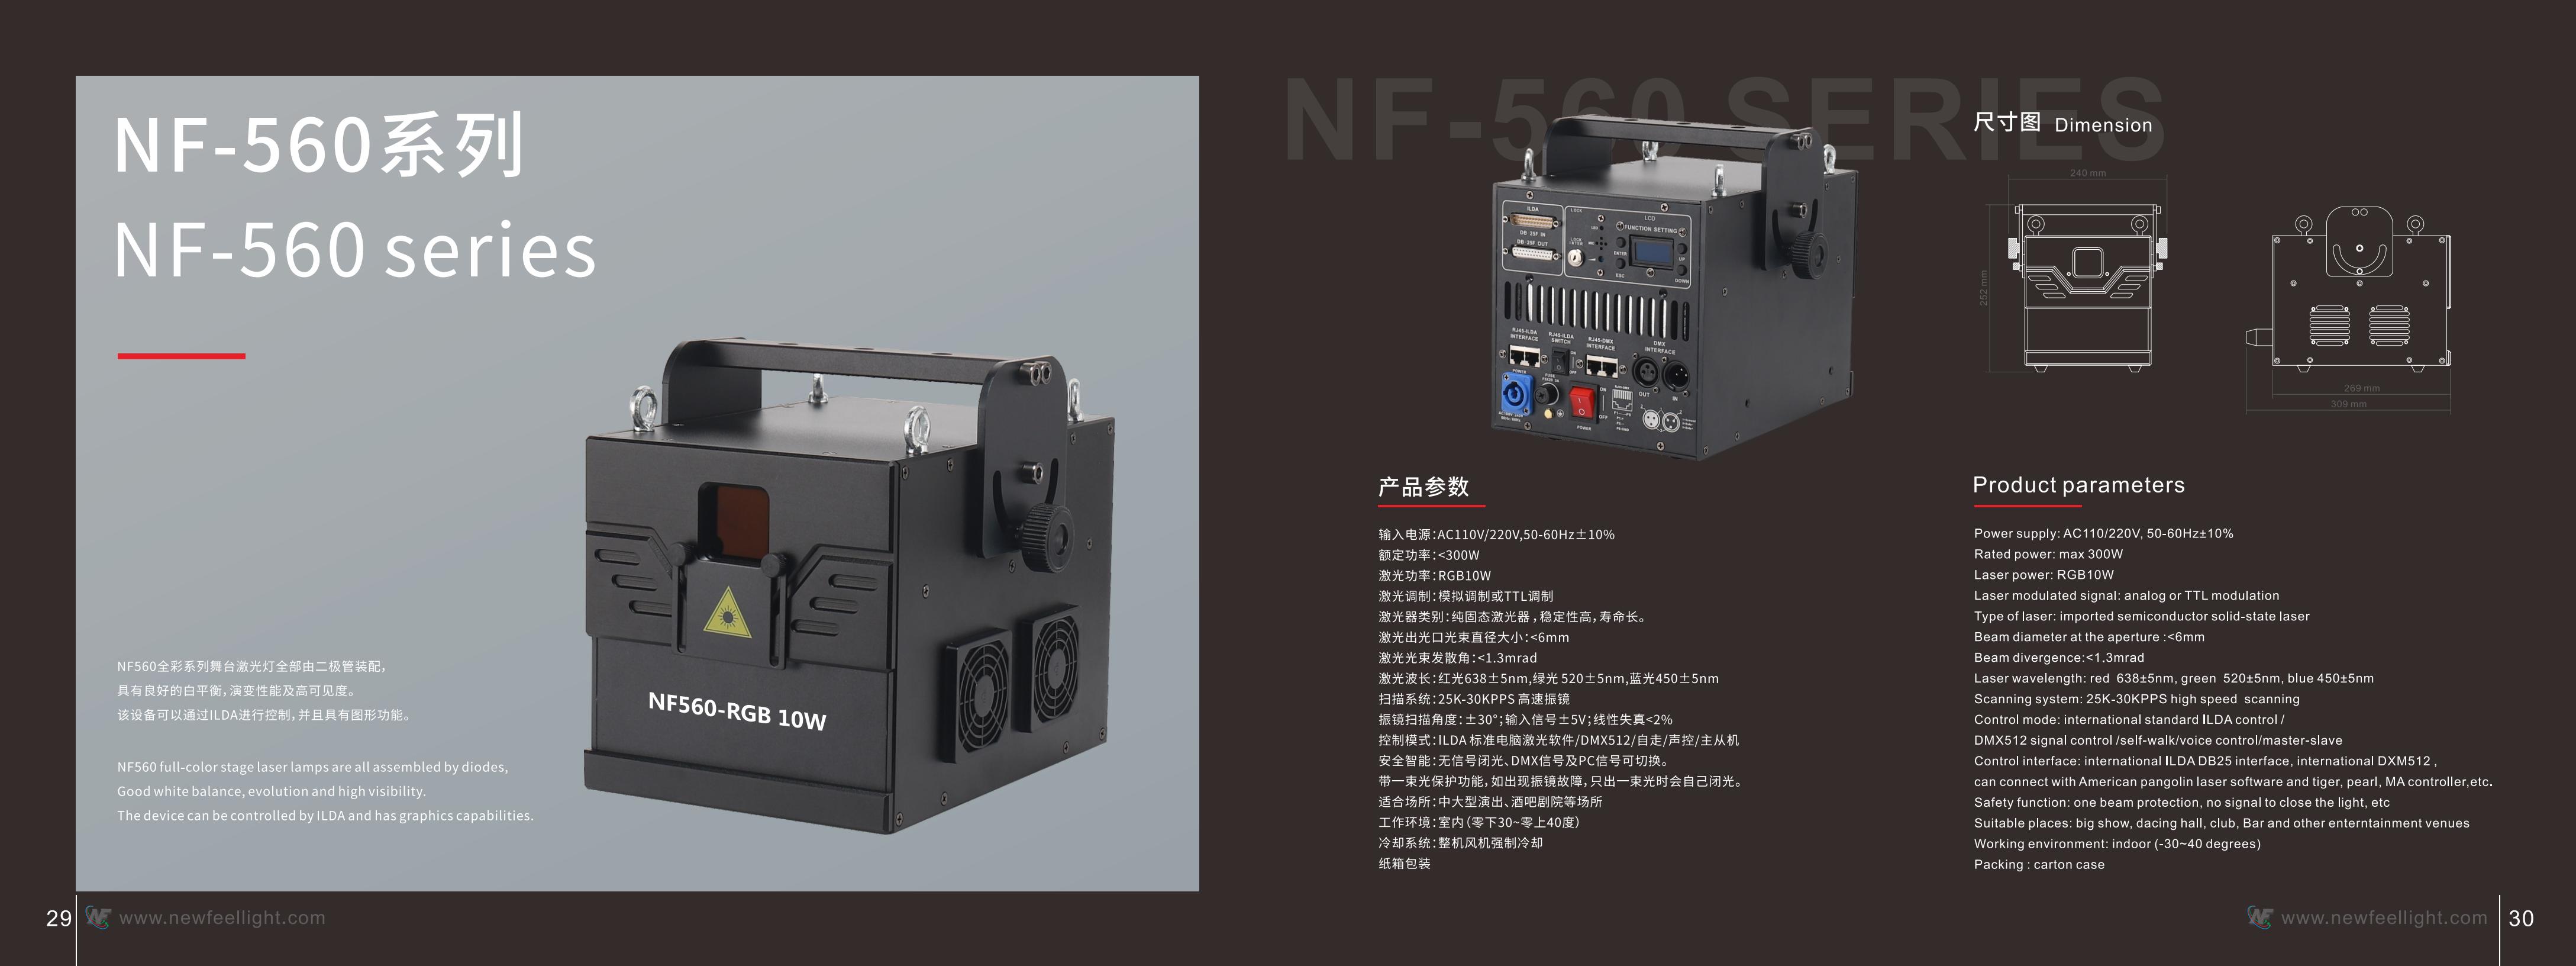 NewFeel Laser Light Product Catalogue_16.jpg